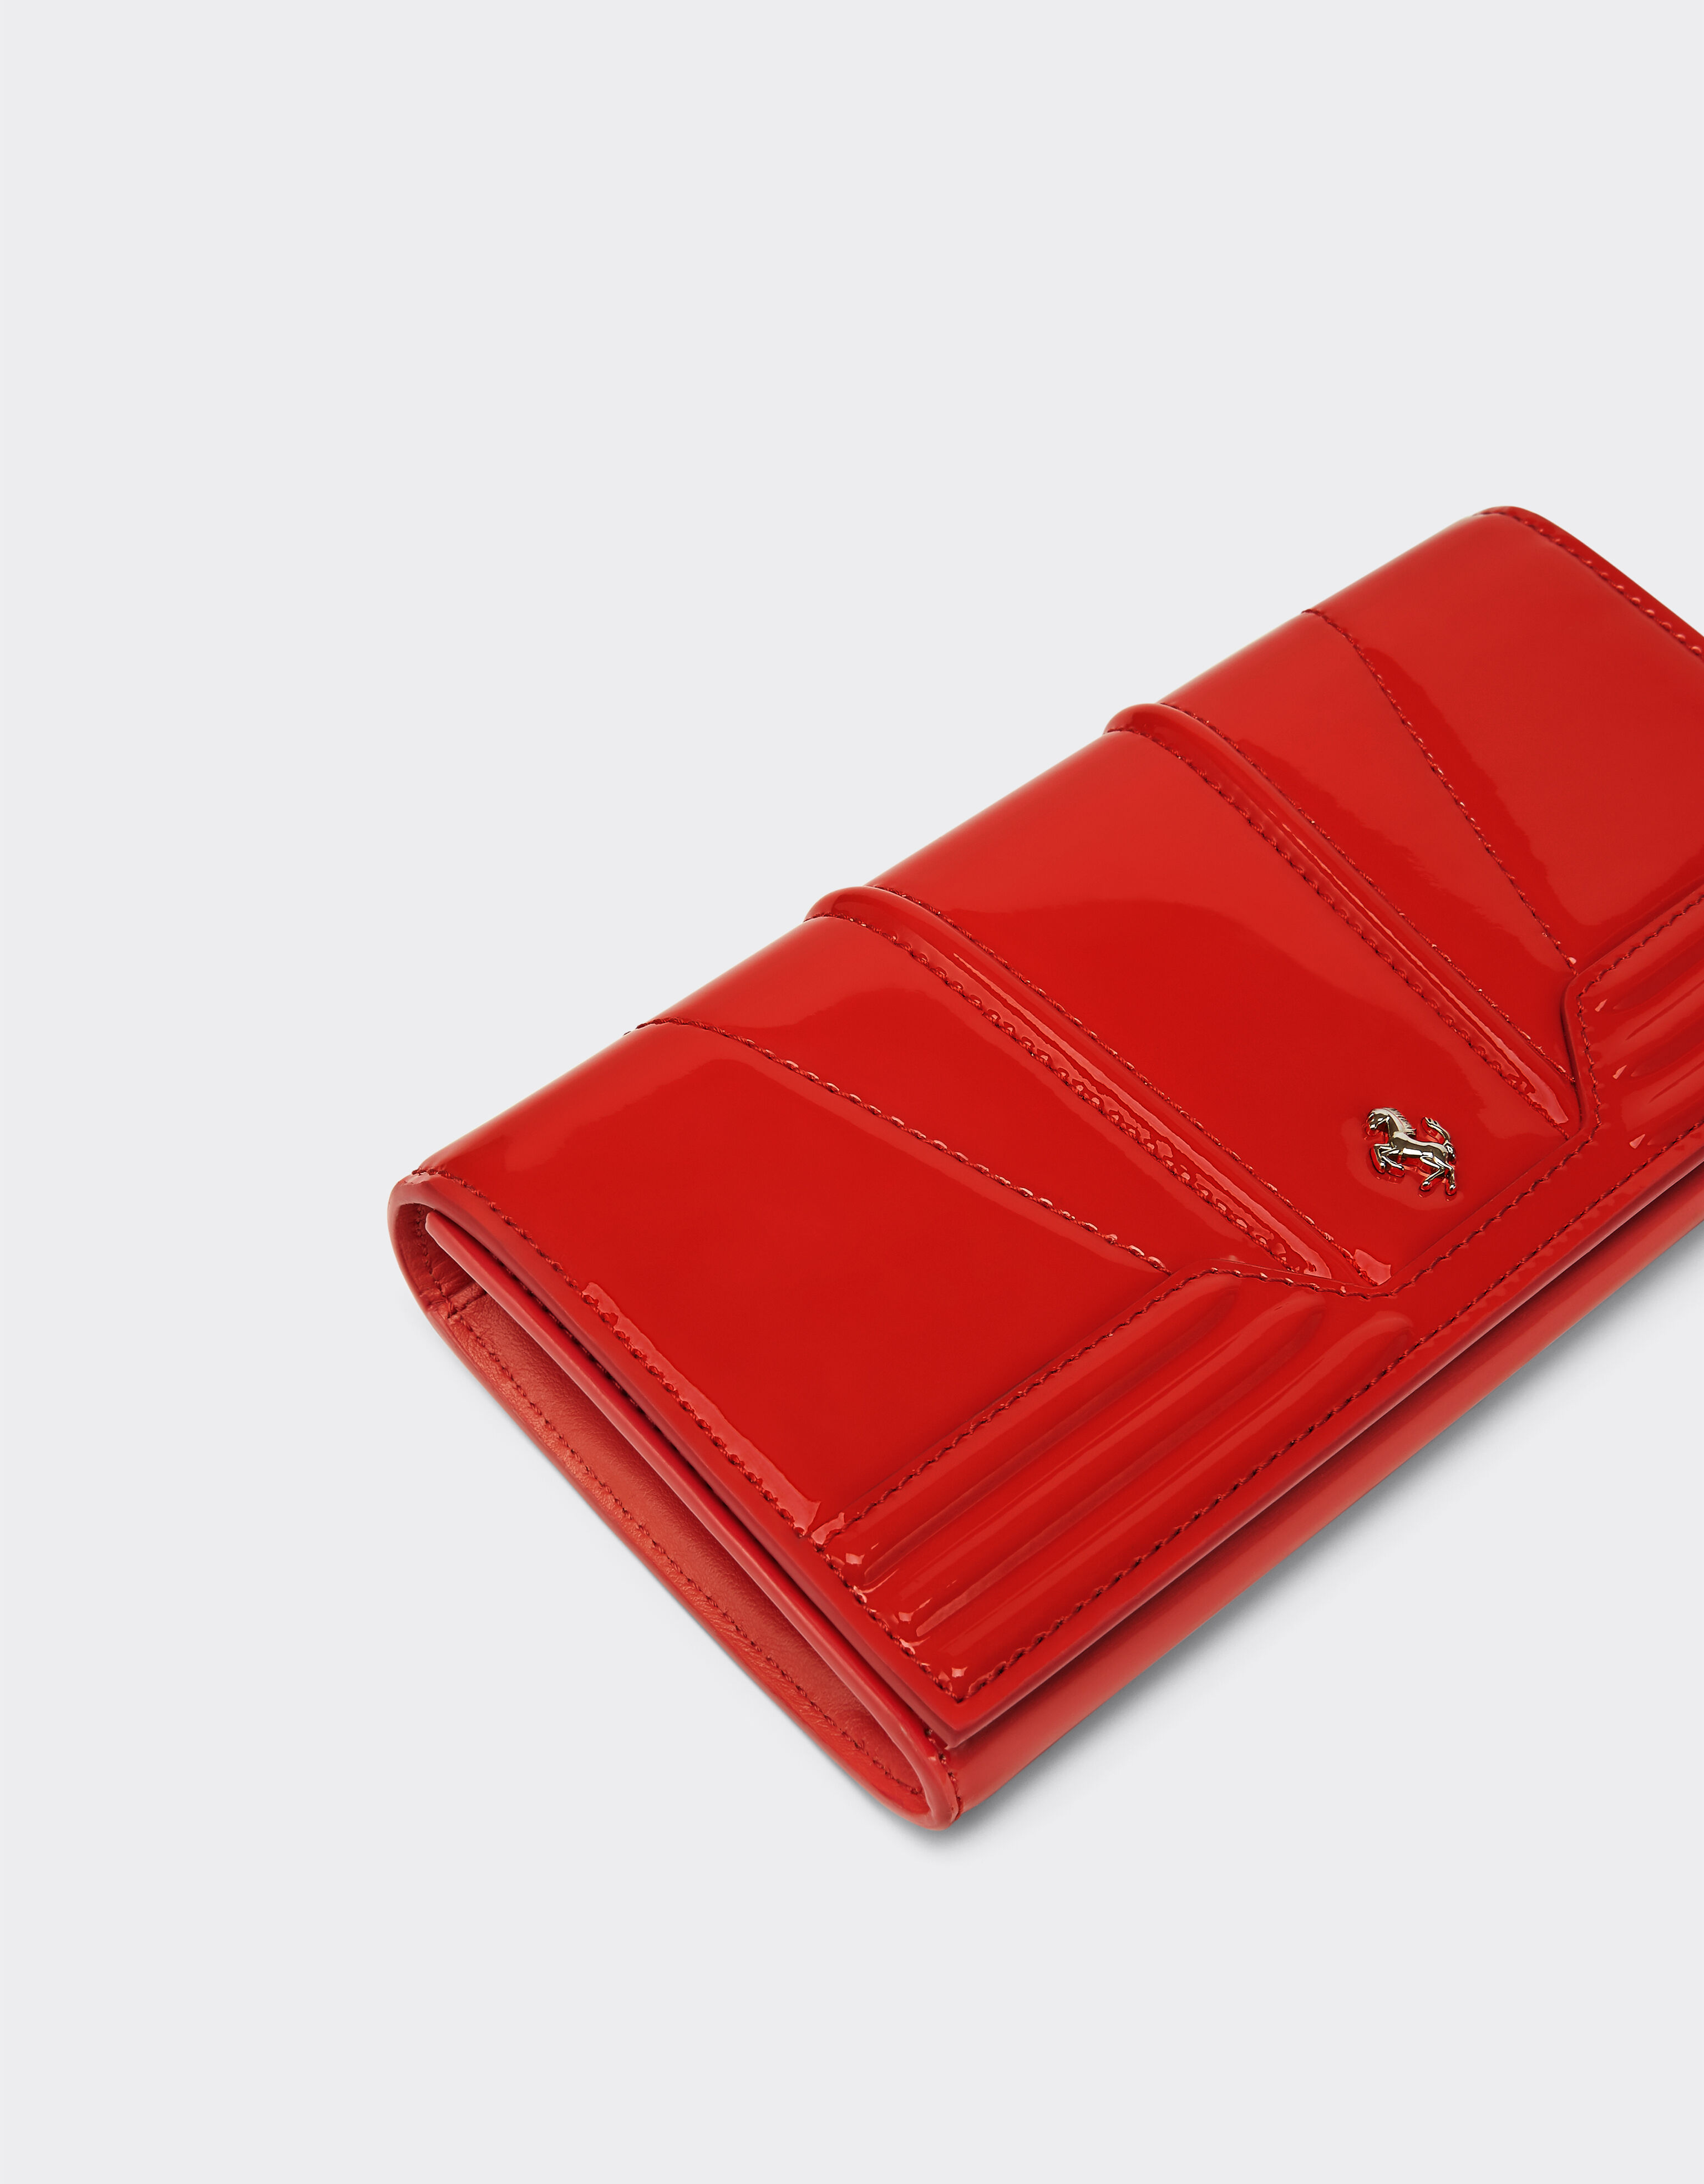 Ferrari Portemonnaie aus Lackleder, dreifach faltbar Rosso Dino 20239f